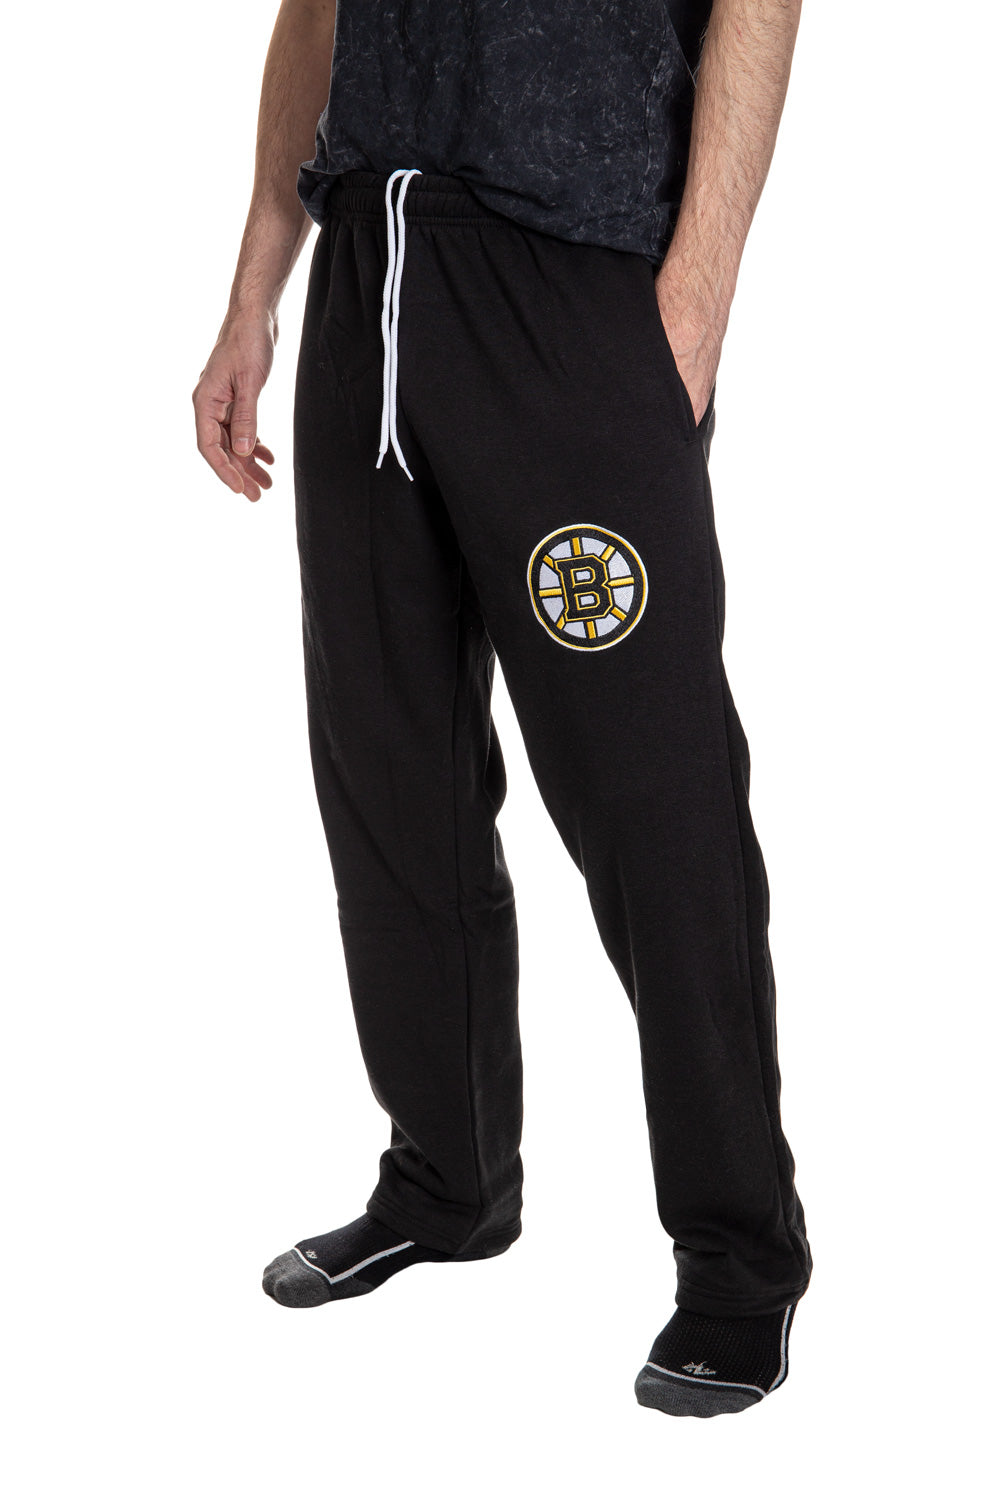 Boston Bruins Premium Fleece Sweatpants Side View of Boston Logo. 